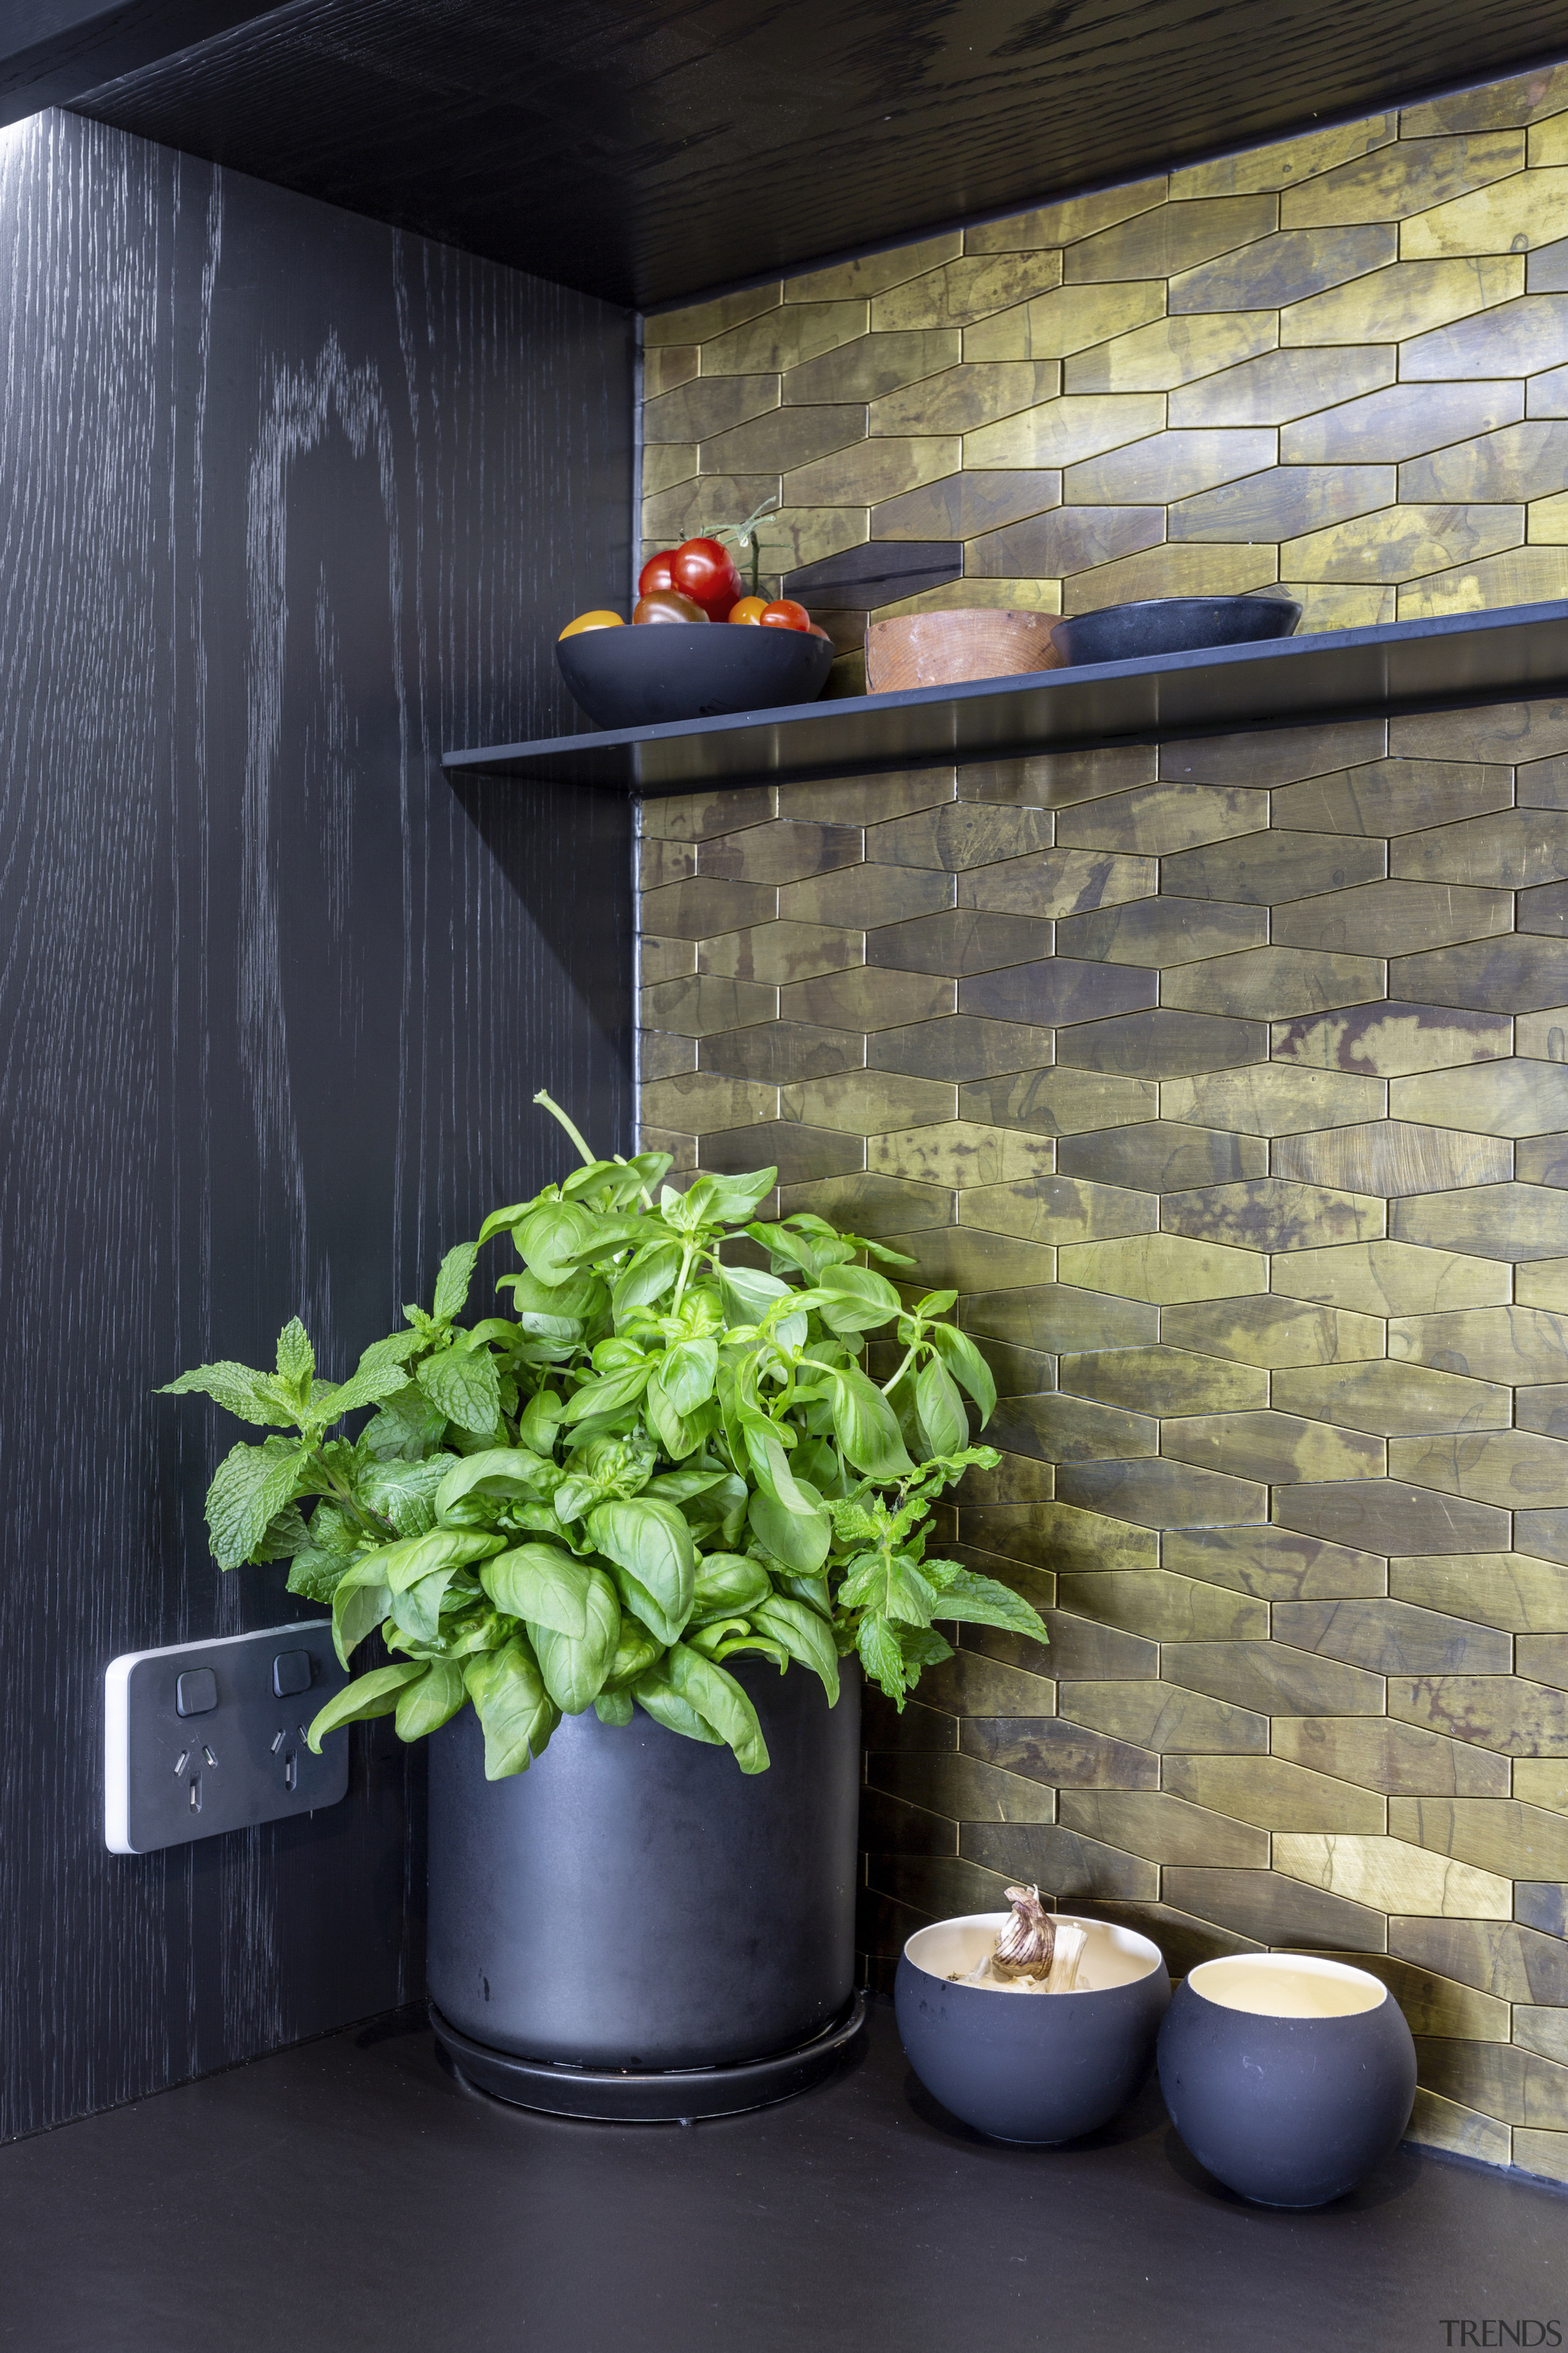 Textured mosaic tiles help to create a warm 